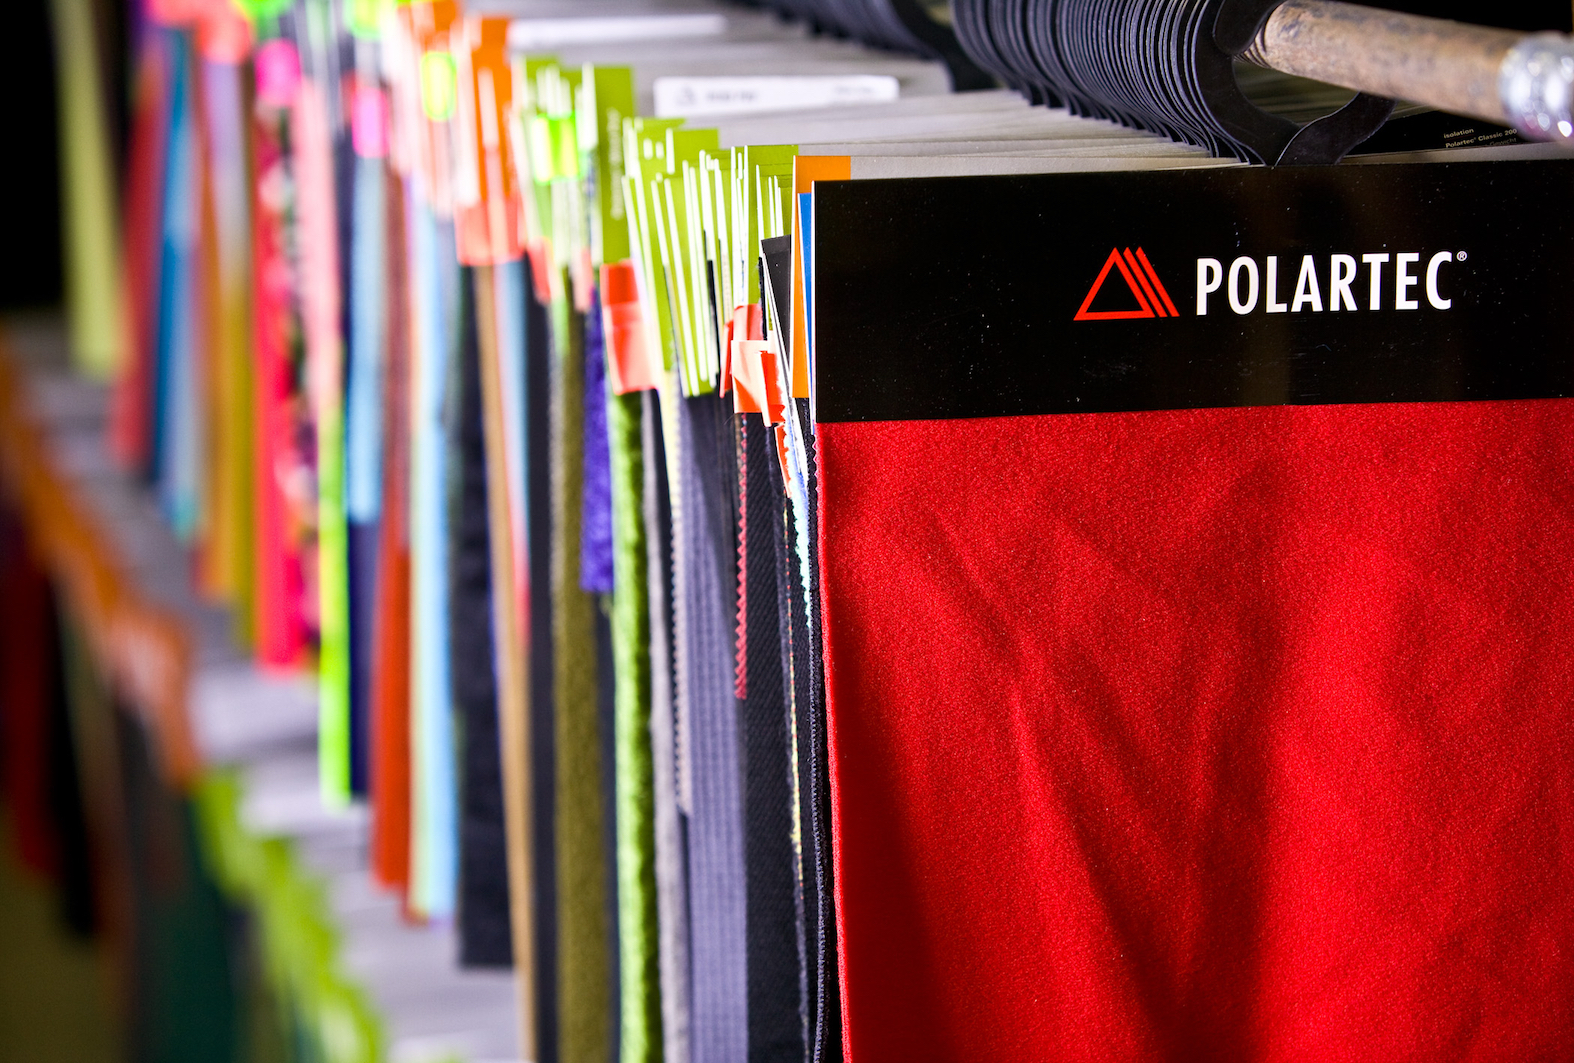 Polartec's 2020 Eco Textiles